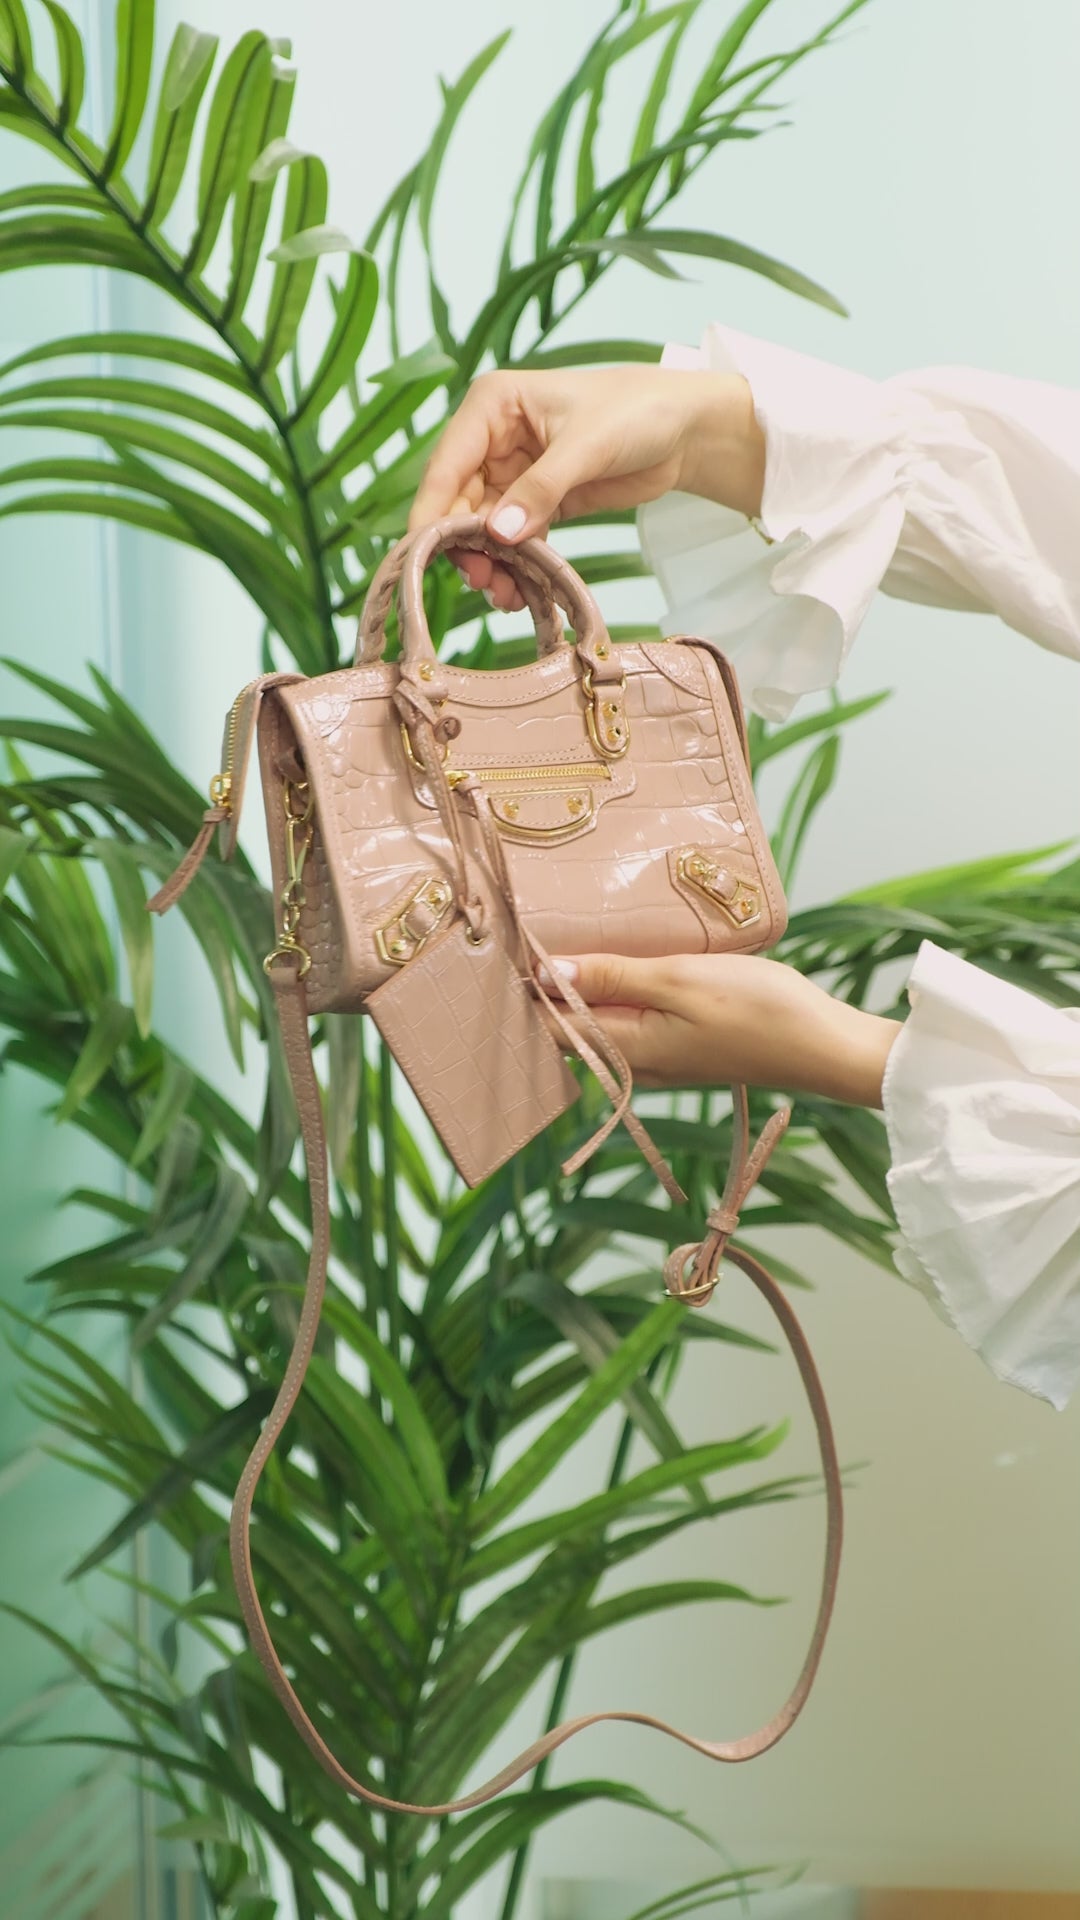 Balenciaga Mini Metallic Edge Shoulder Bag in Shiny Crocodile-Embossed Leather